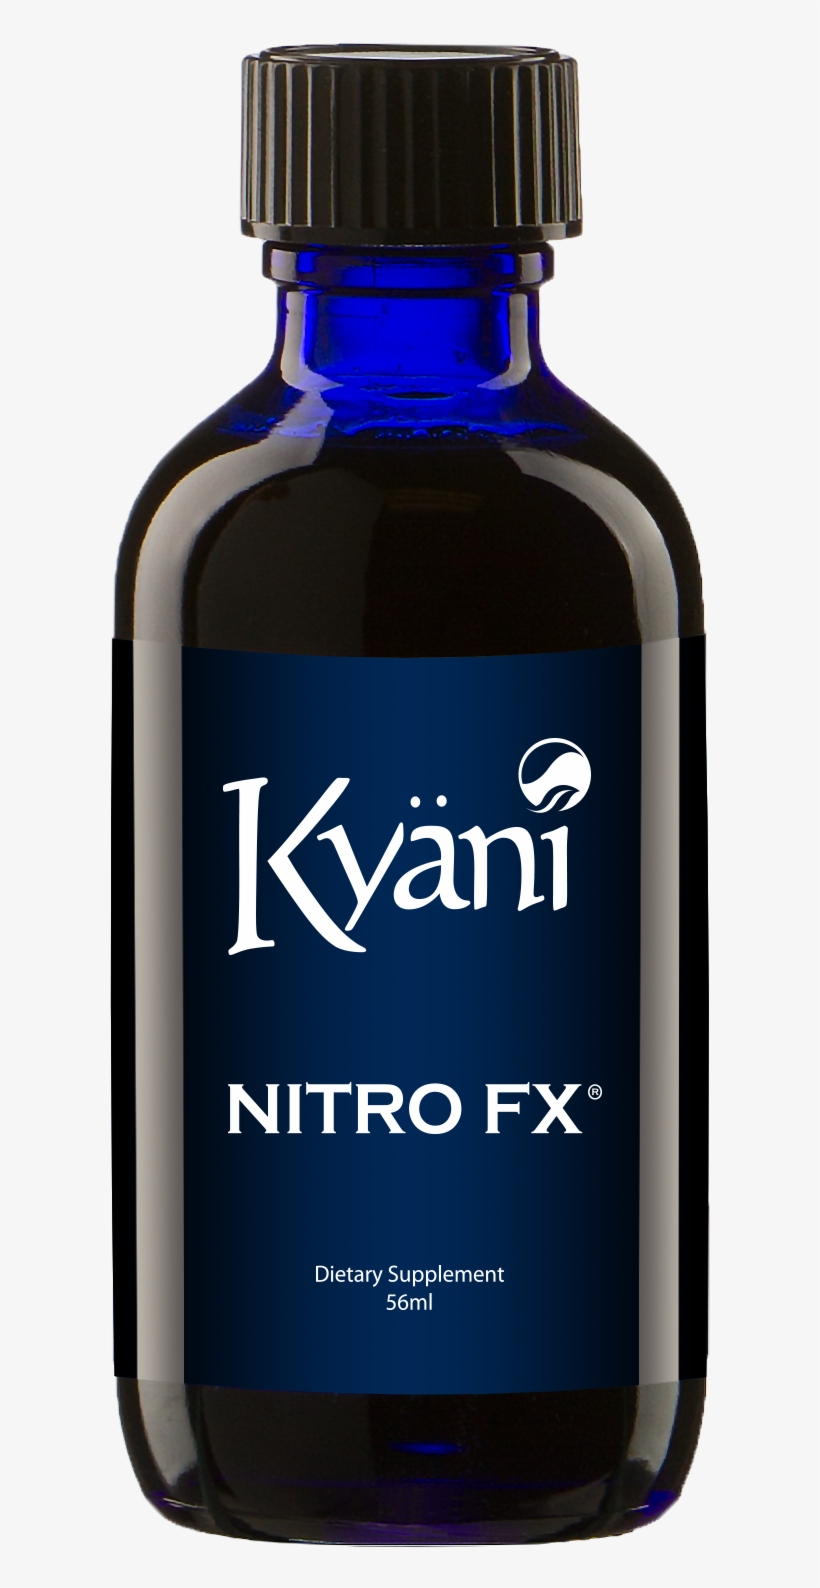 Kyäni Nitrofx™ Es Una Mezcla Patentada De Concentrado - Kyani, transparent png #7672197